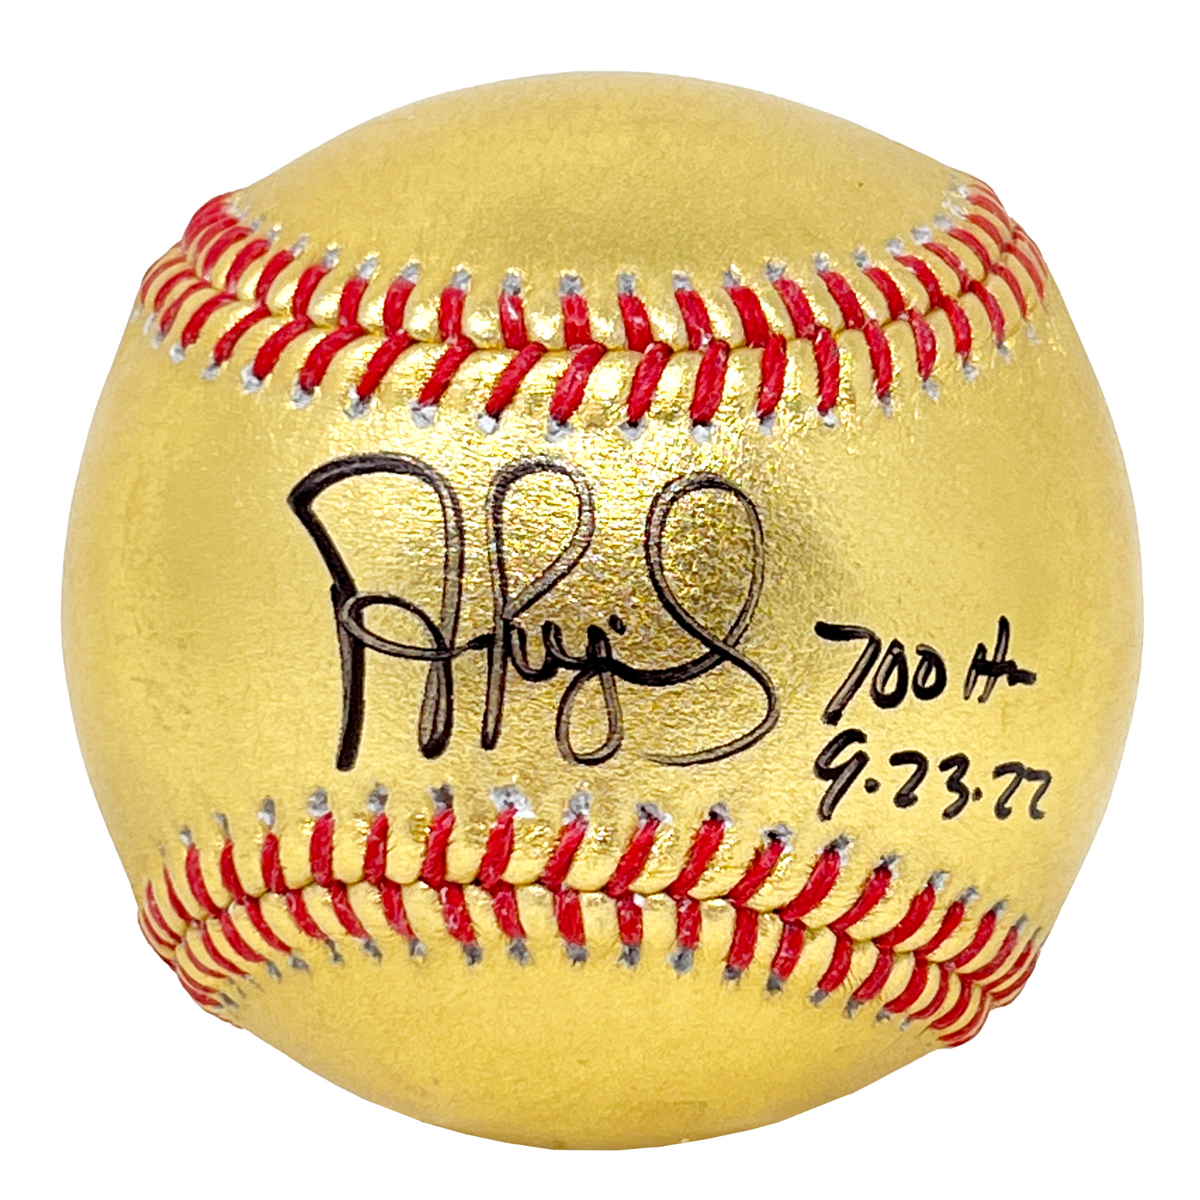 Albert Pujols Signed Baseball, Autographed Albert Pujols Baseball